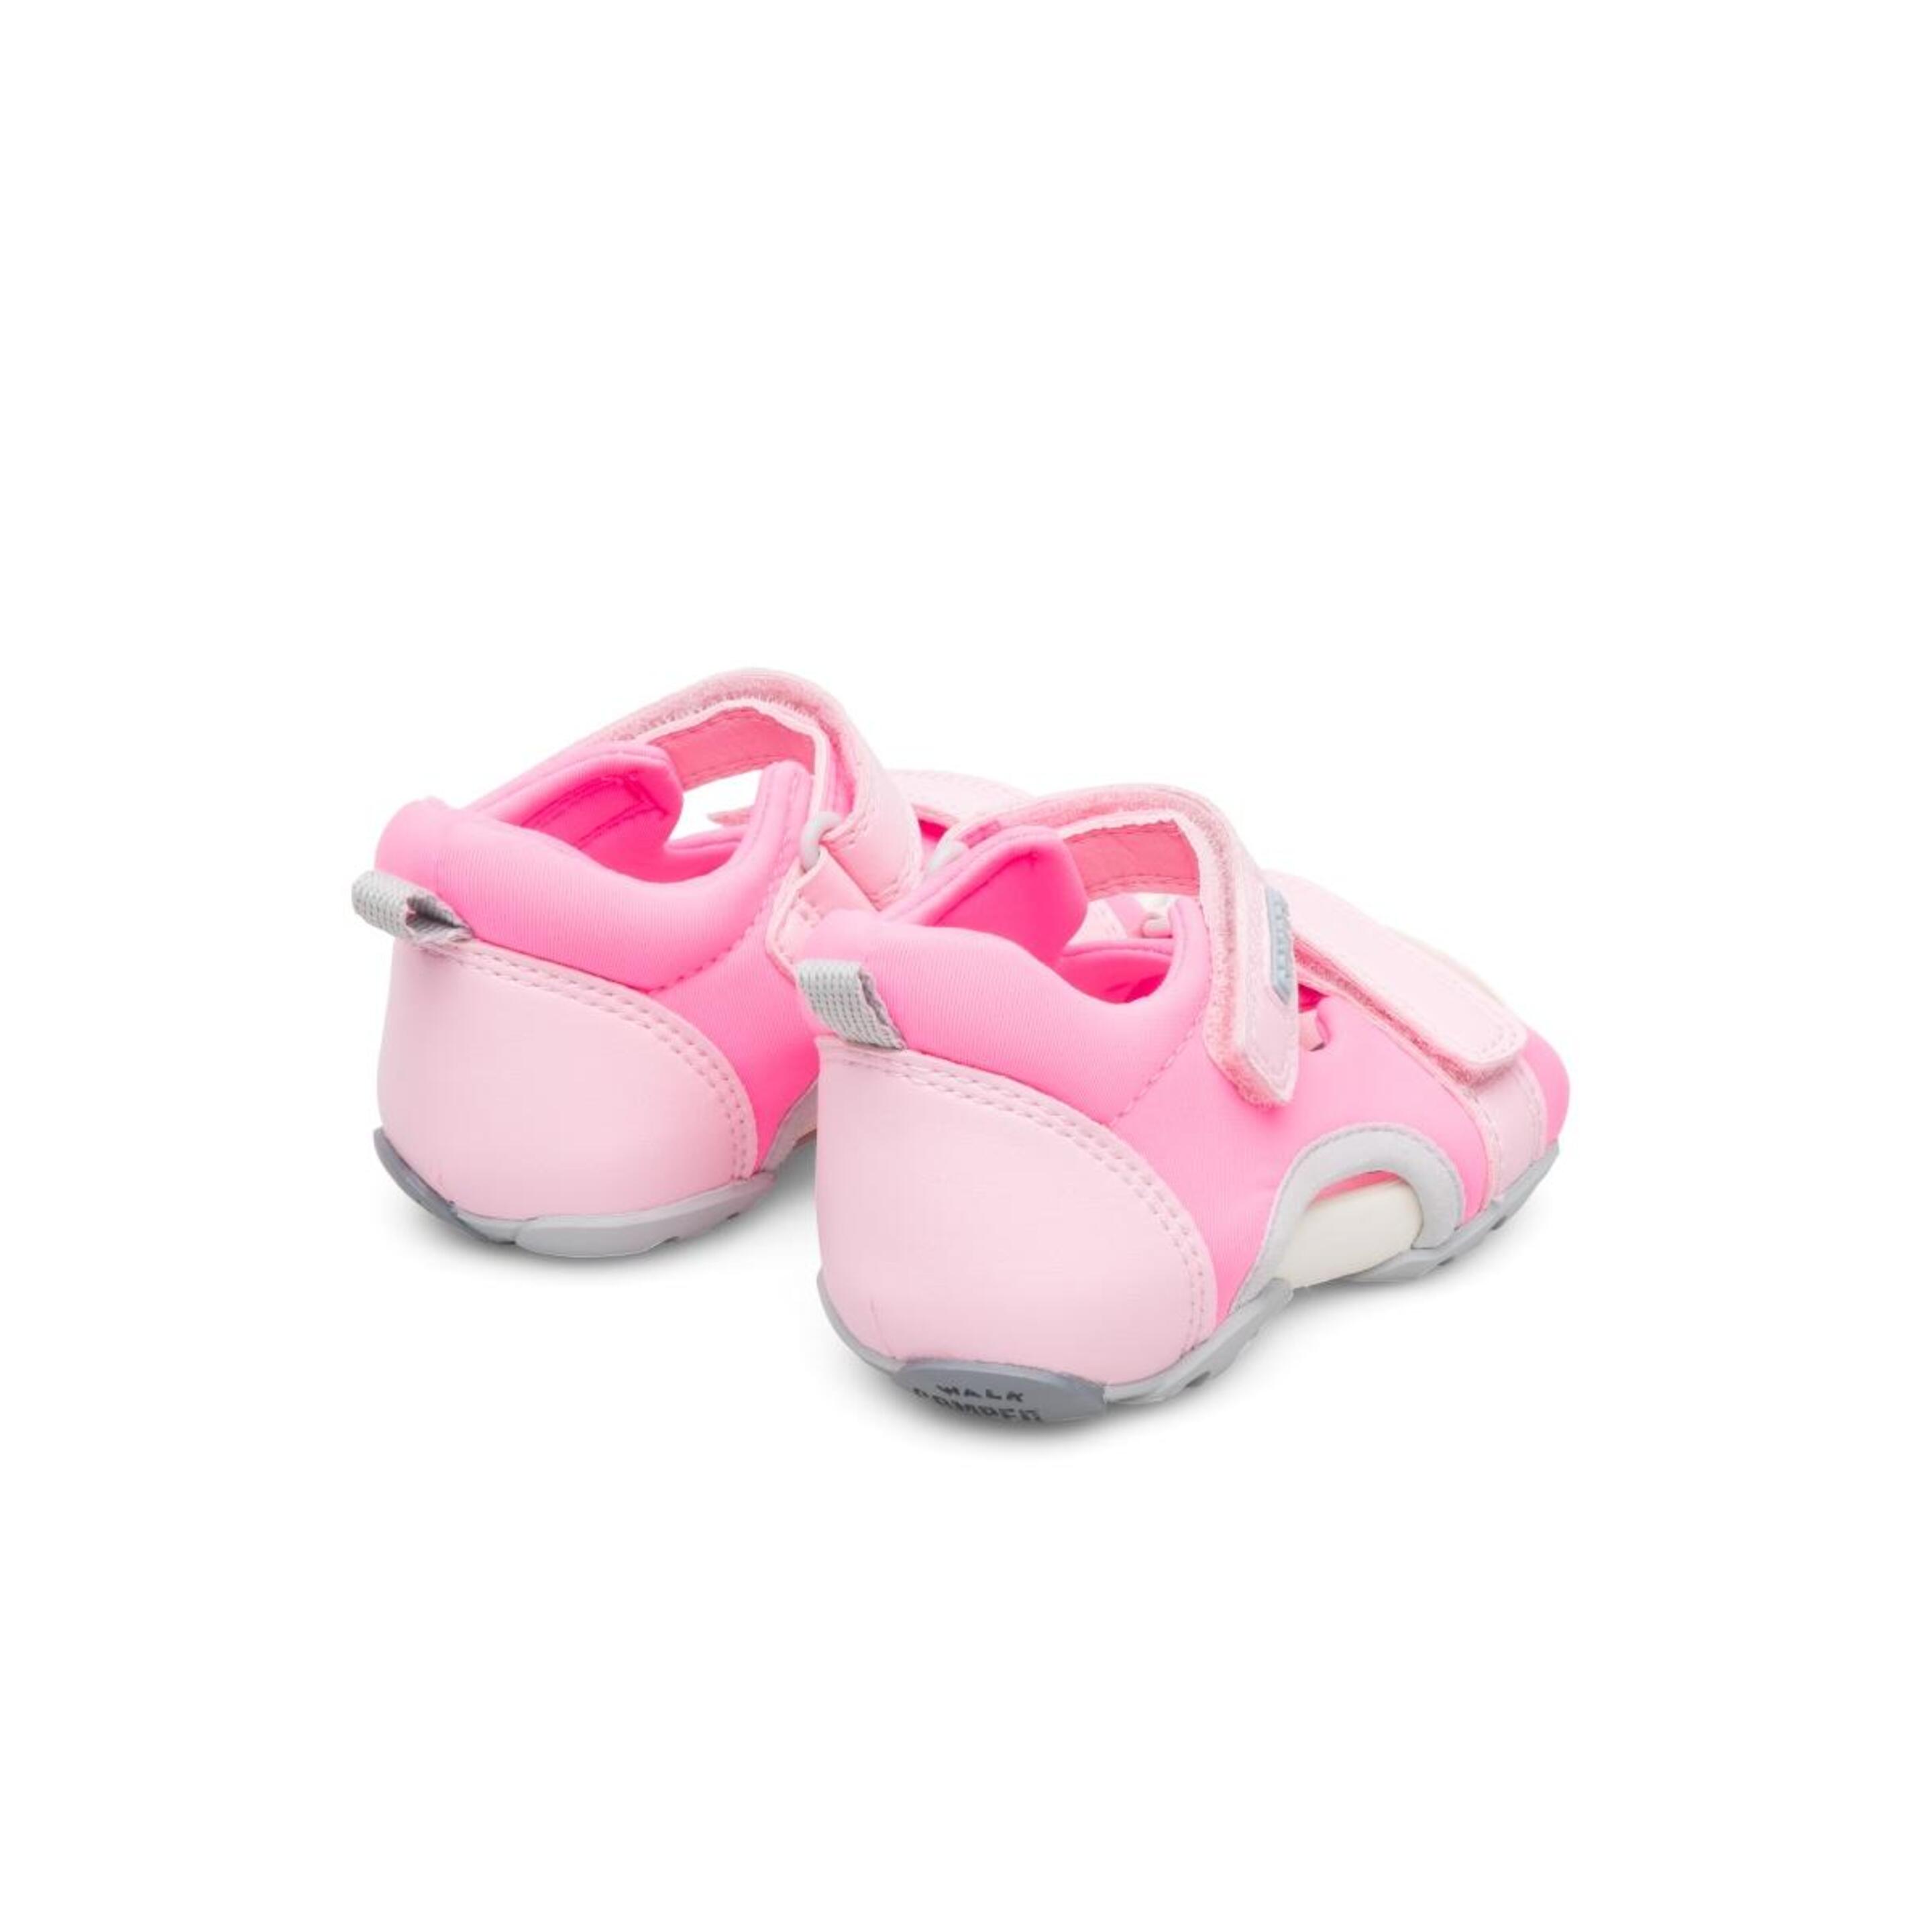 Sandalias Camper Ous Primeros Pasos - rosa - Zapatos  MKP